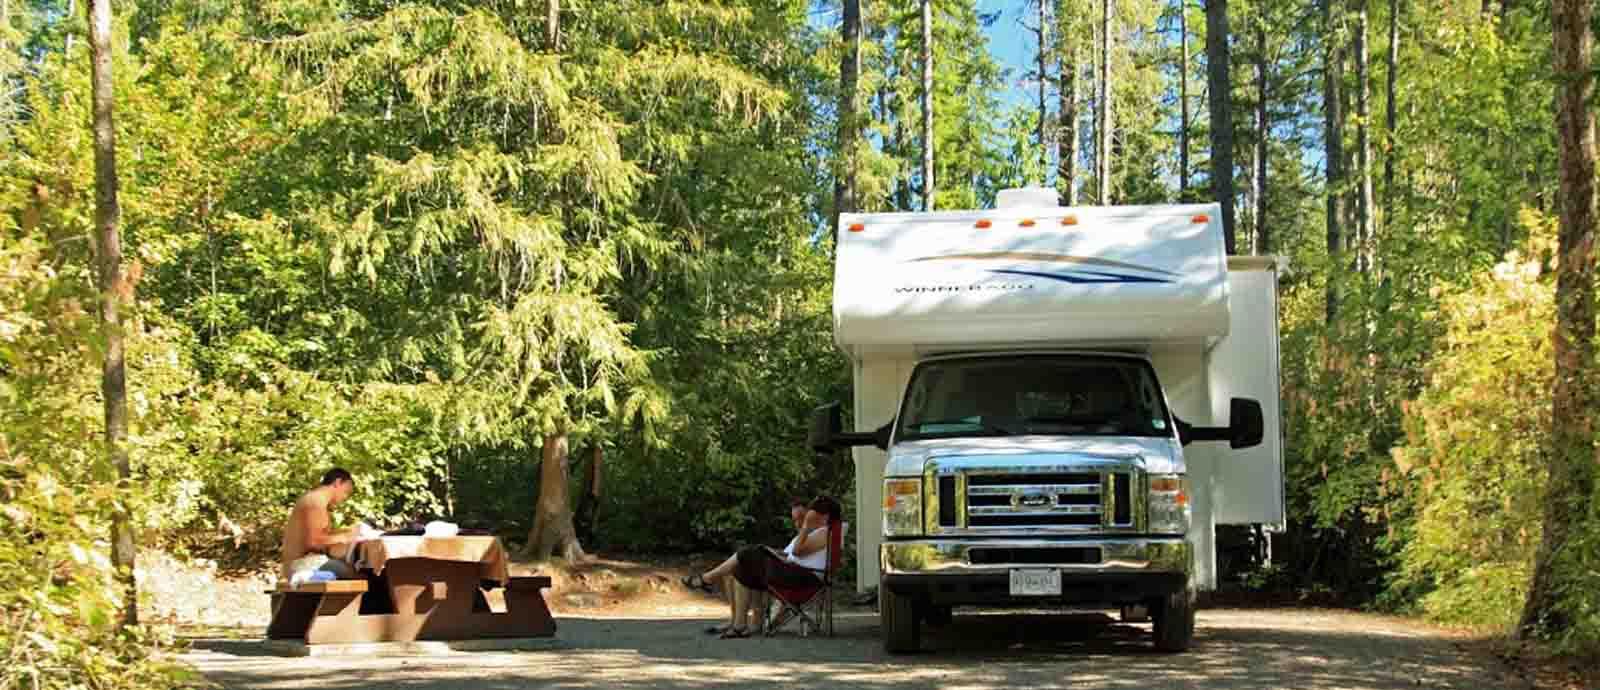 Witte camper in bossen Canada met picknick tafel